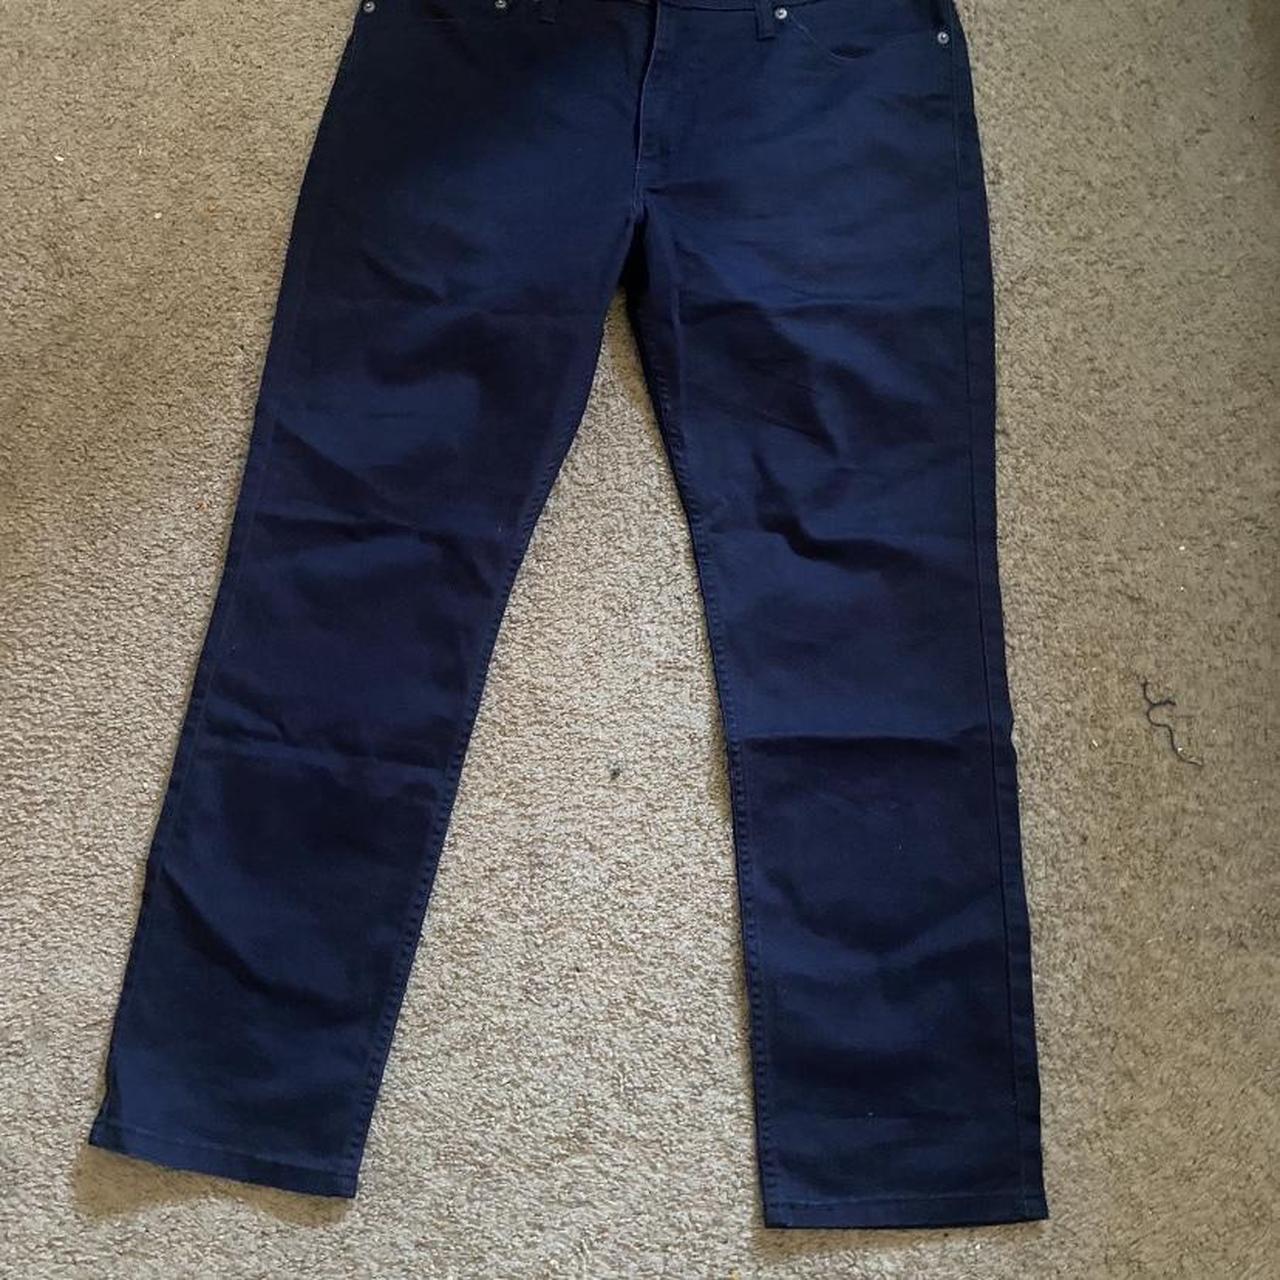 Levi’s 511 36x30 Clean pair of pants - Depop